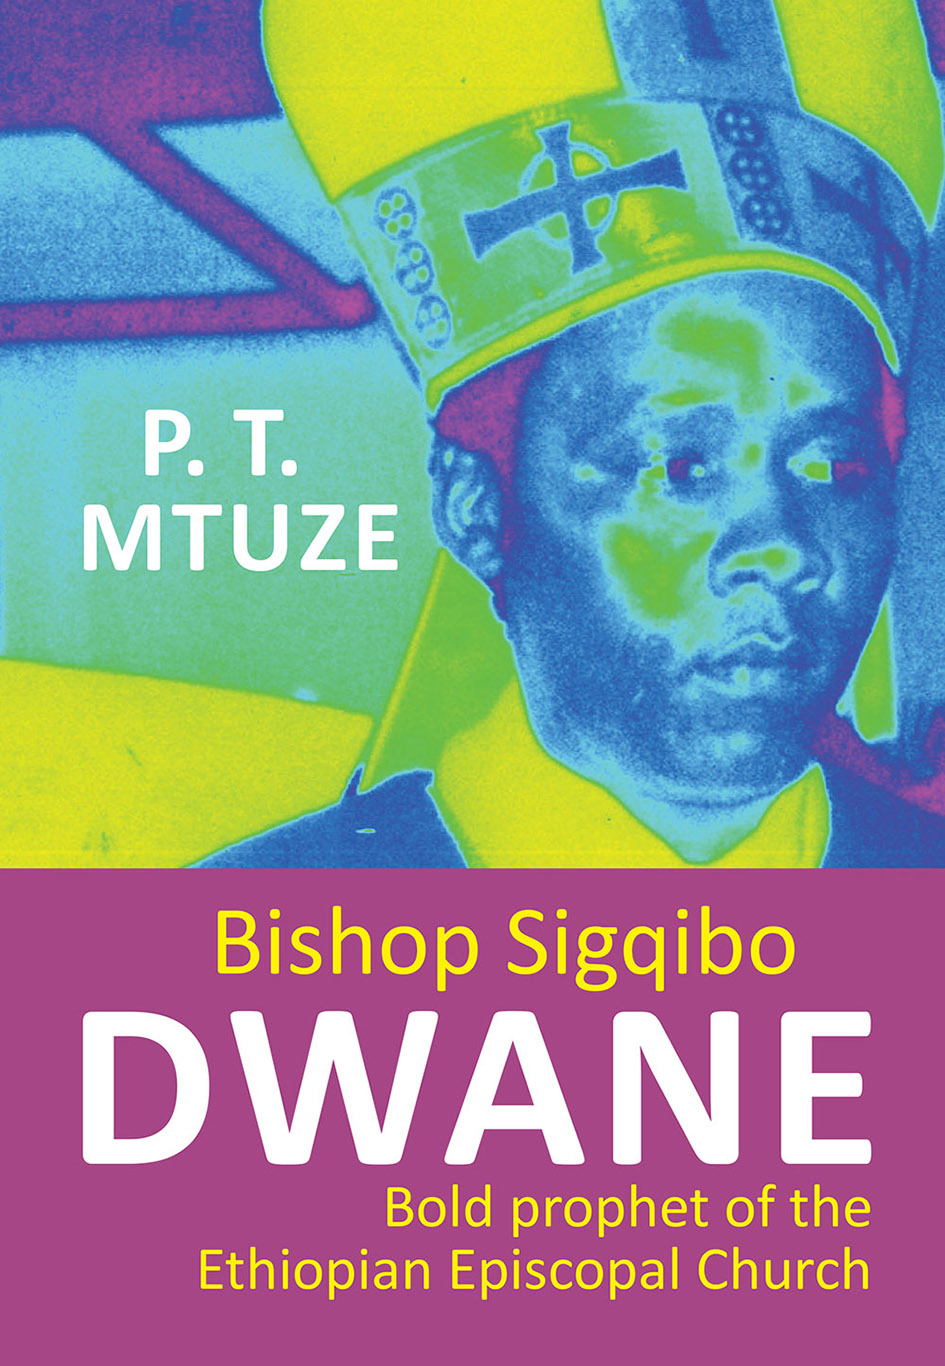 MTUZE_Bishop Dwane cover - Copy.jpg